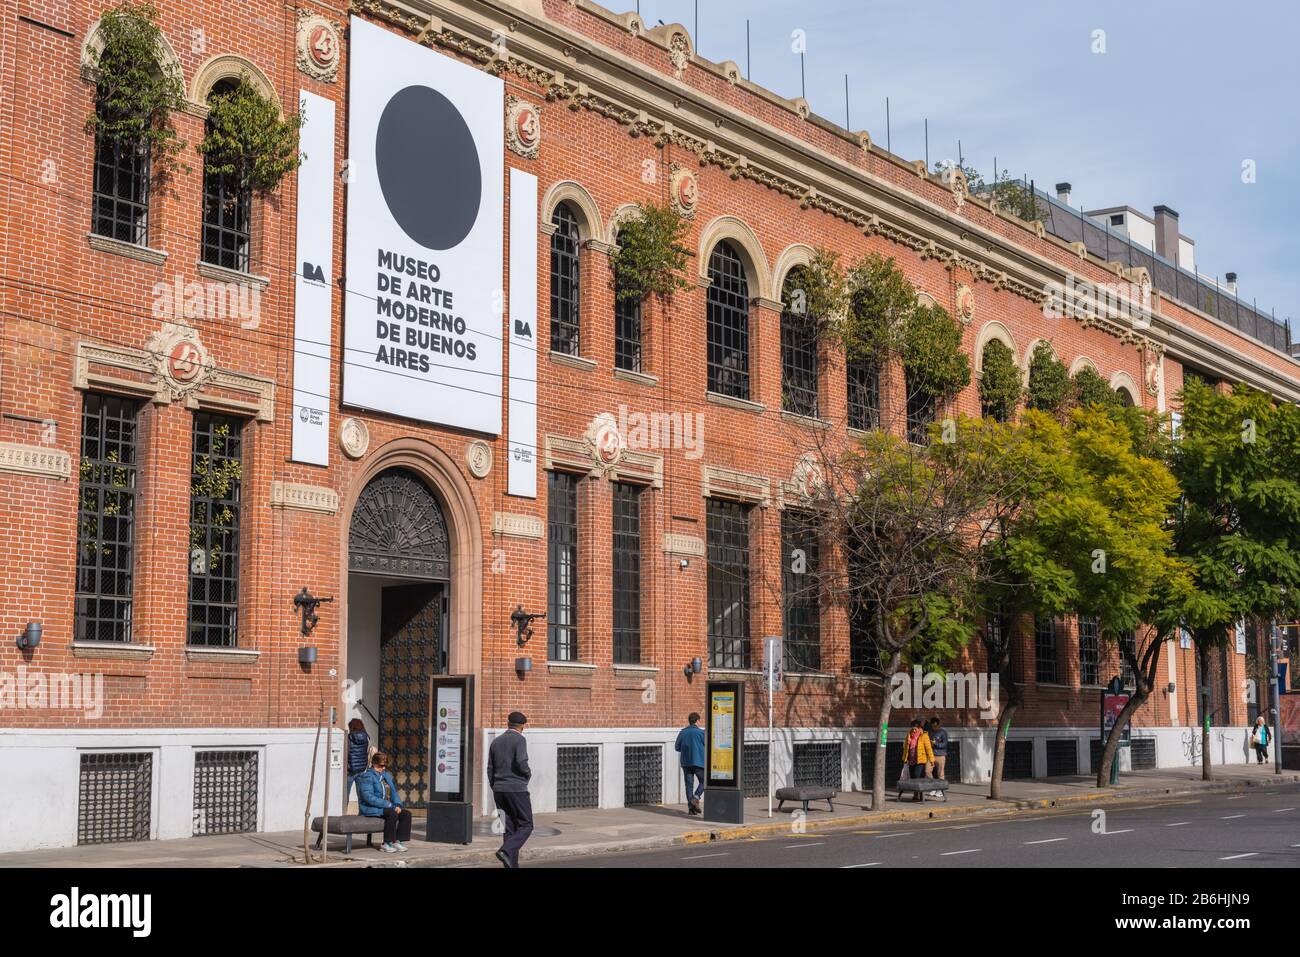 Museo de Arte Moderne de Buenos Aires, Museum of Modern Arts Buenos Aires, San Telmo District, Buenos Aires, Argentina Stock Photo